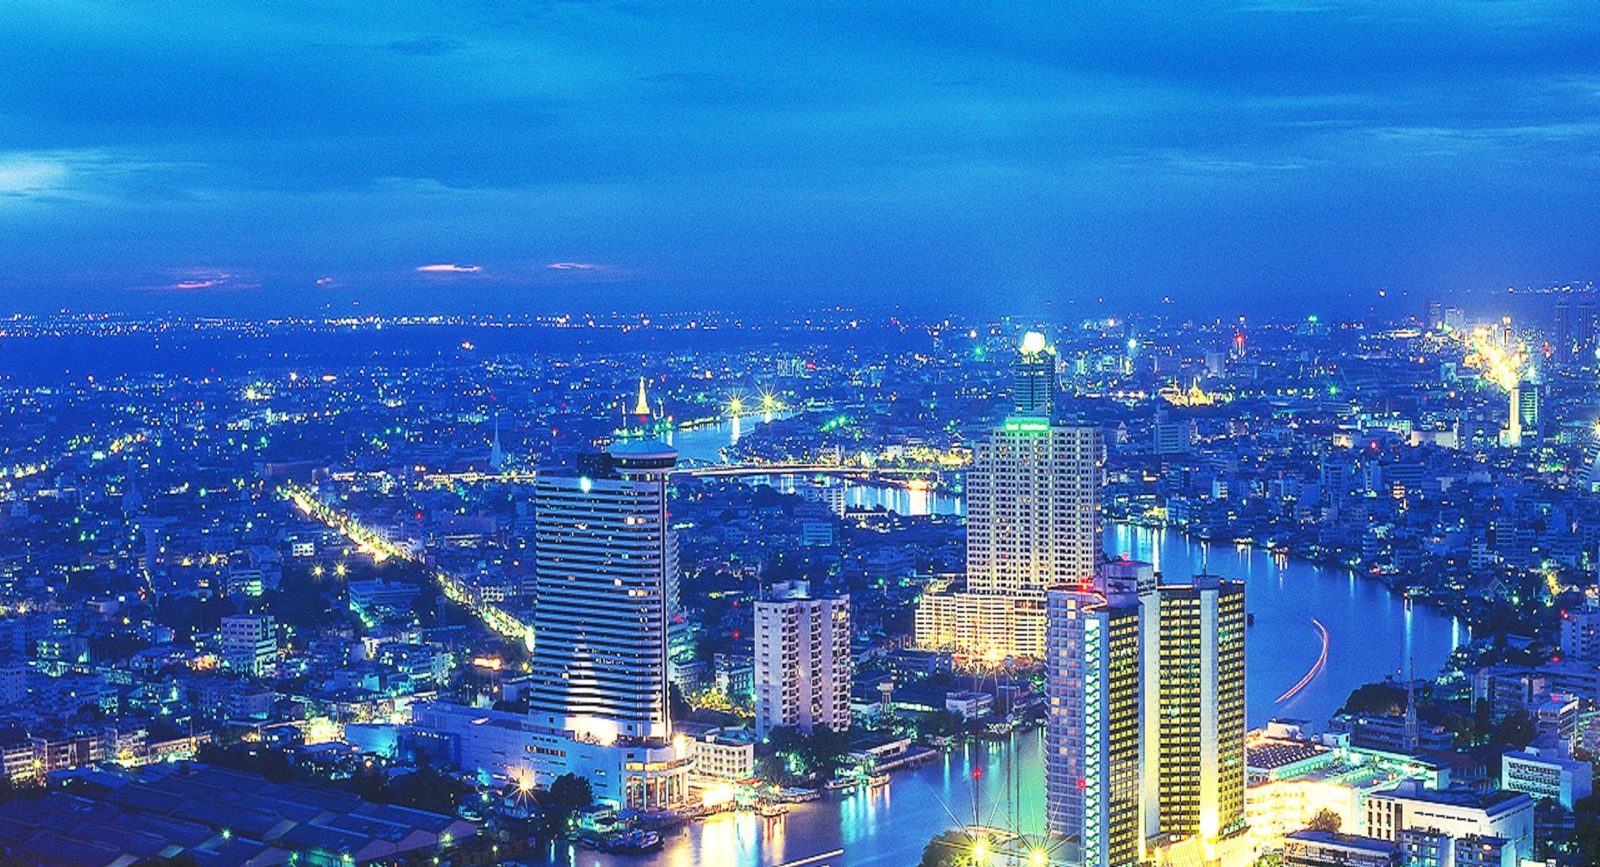 Bangkok Pattaya Package